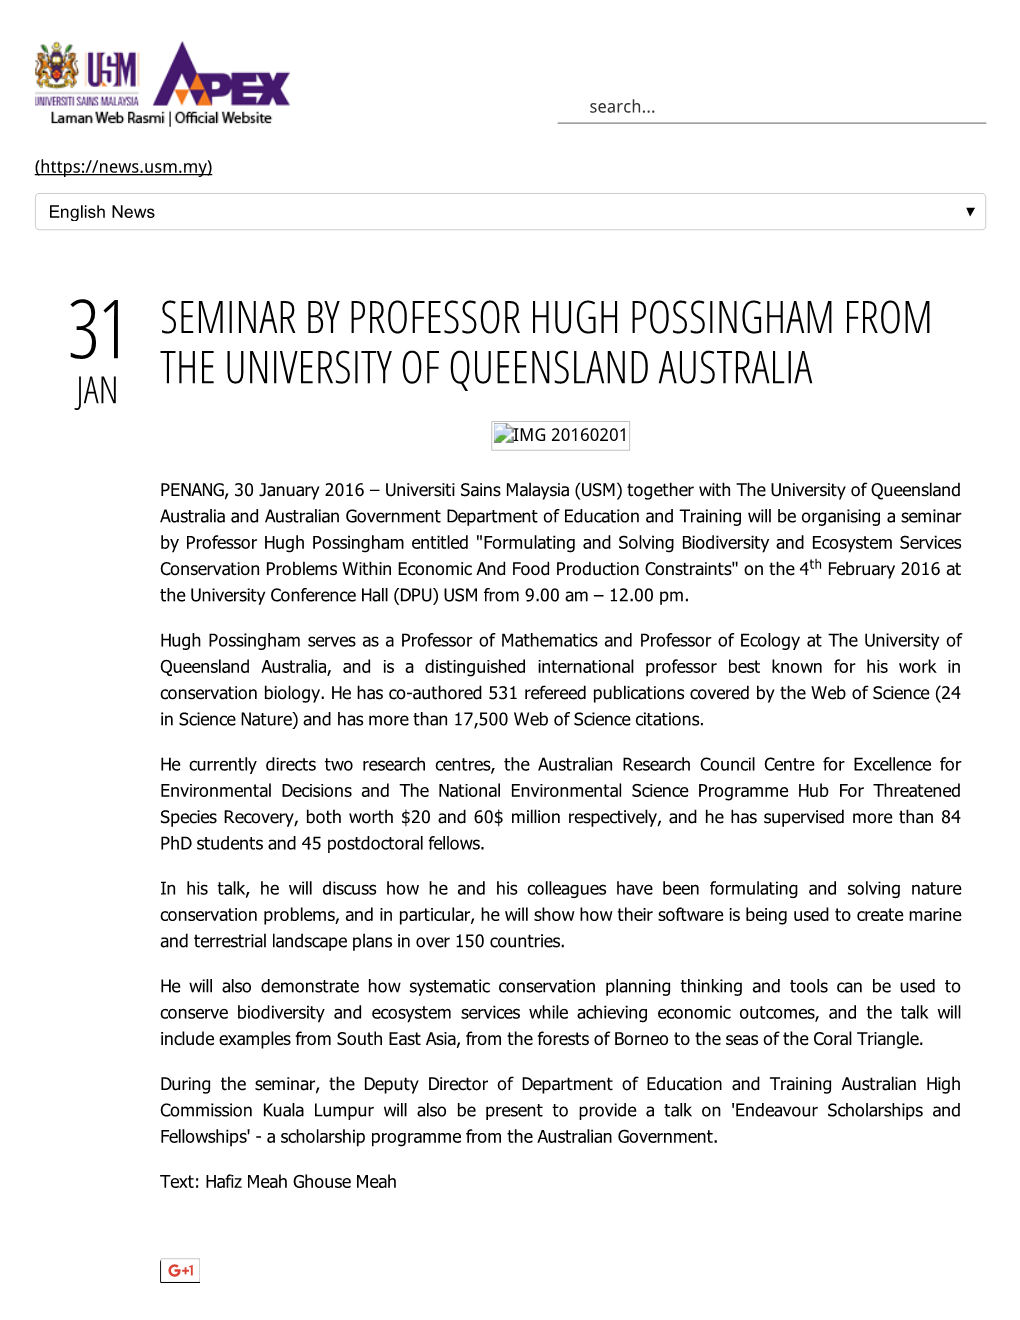 Seminar by Professor Hugh Possingham from The